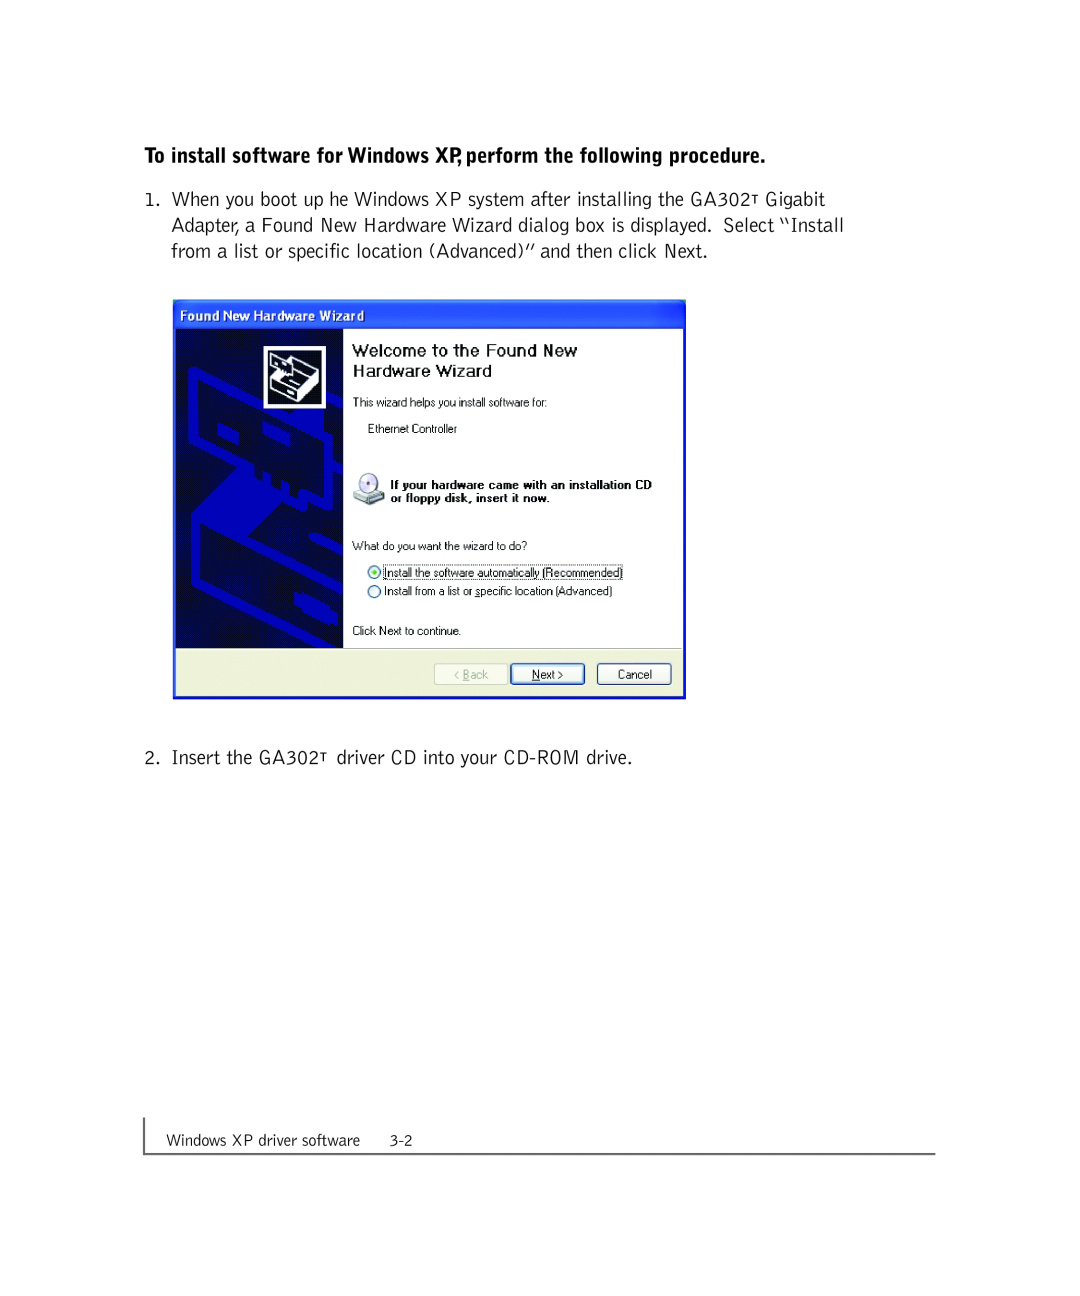 NETGEAR GA302T manual To install software for Windows XP, perform the following procedure, Windows XP driver software 